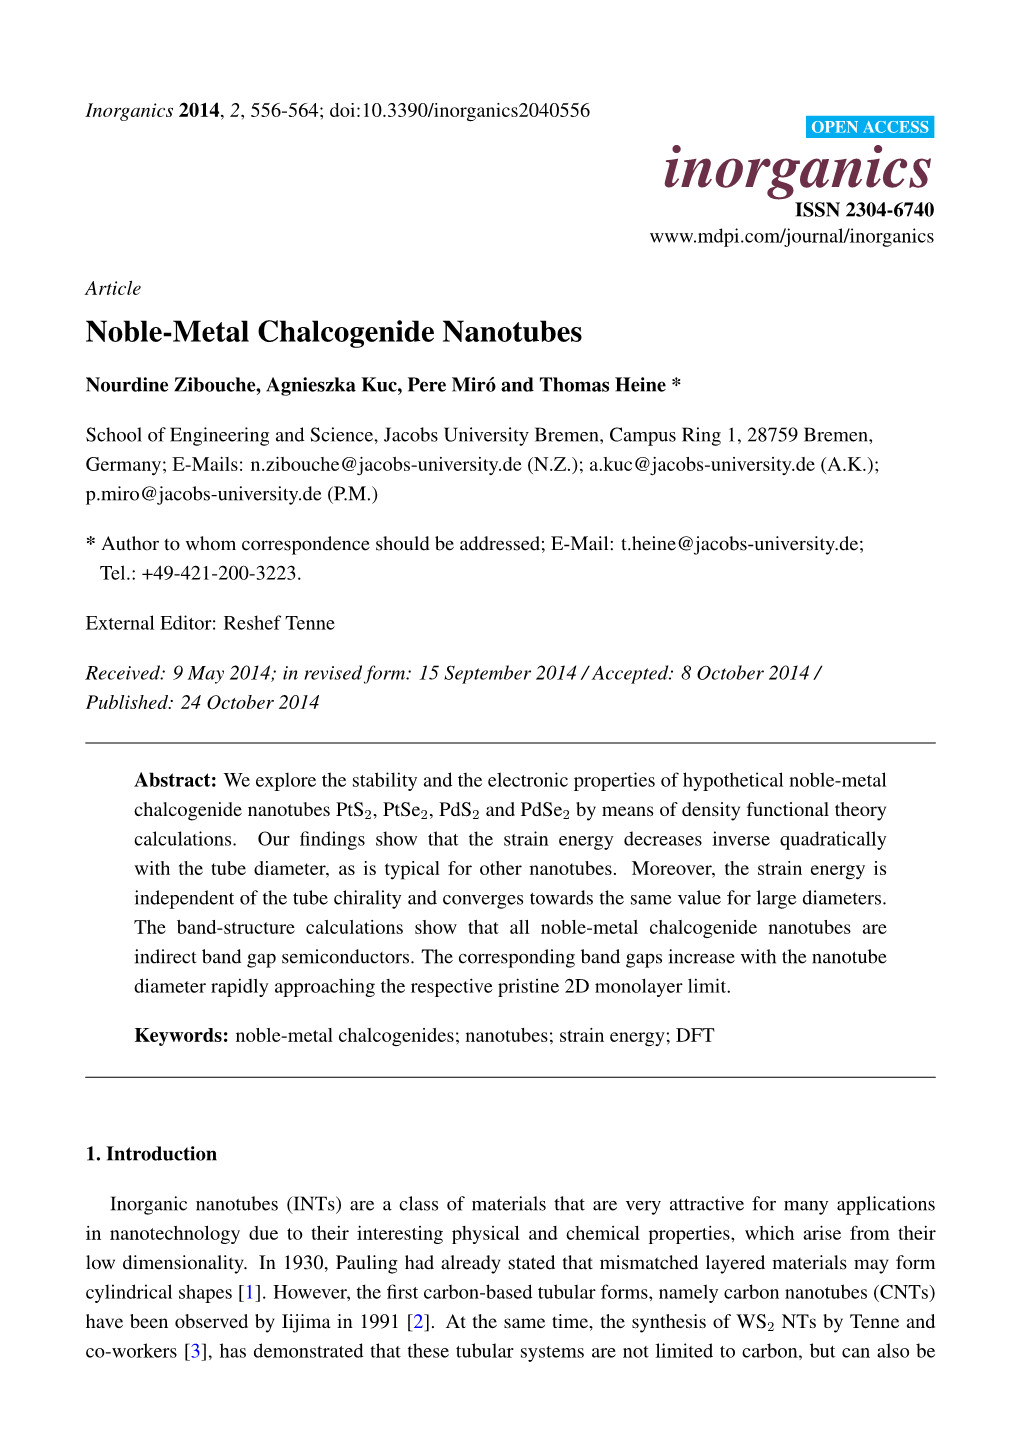 Noble-Metal Chalcogenide Nanotubes